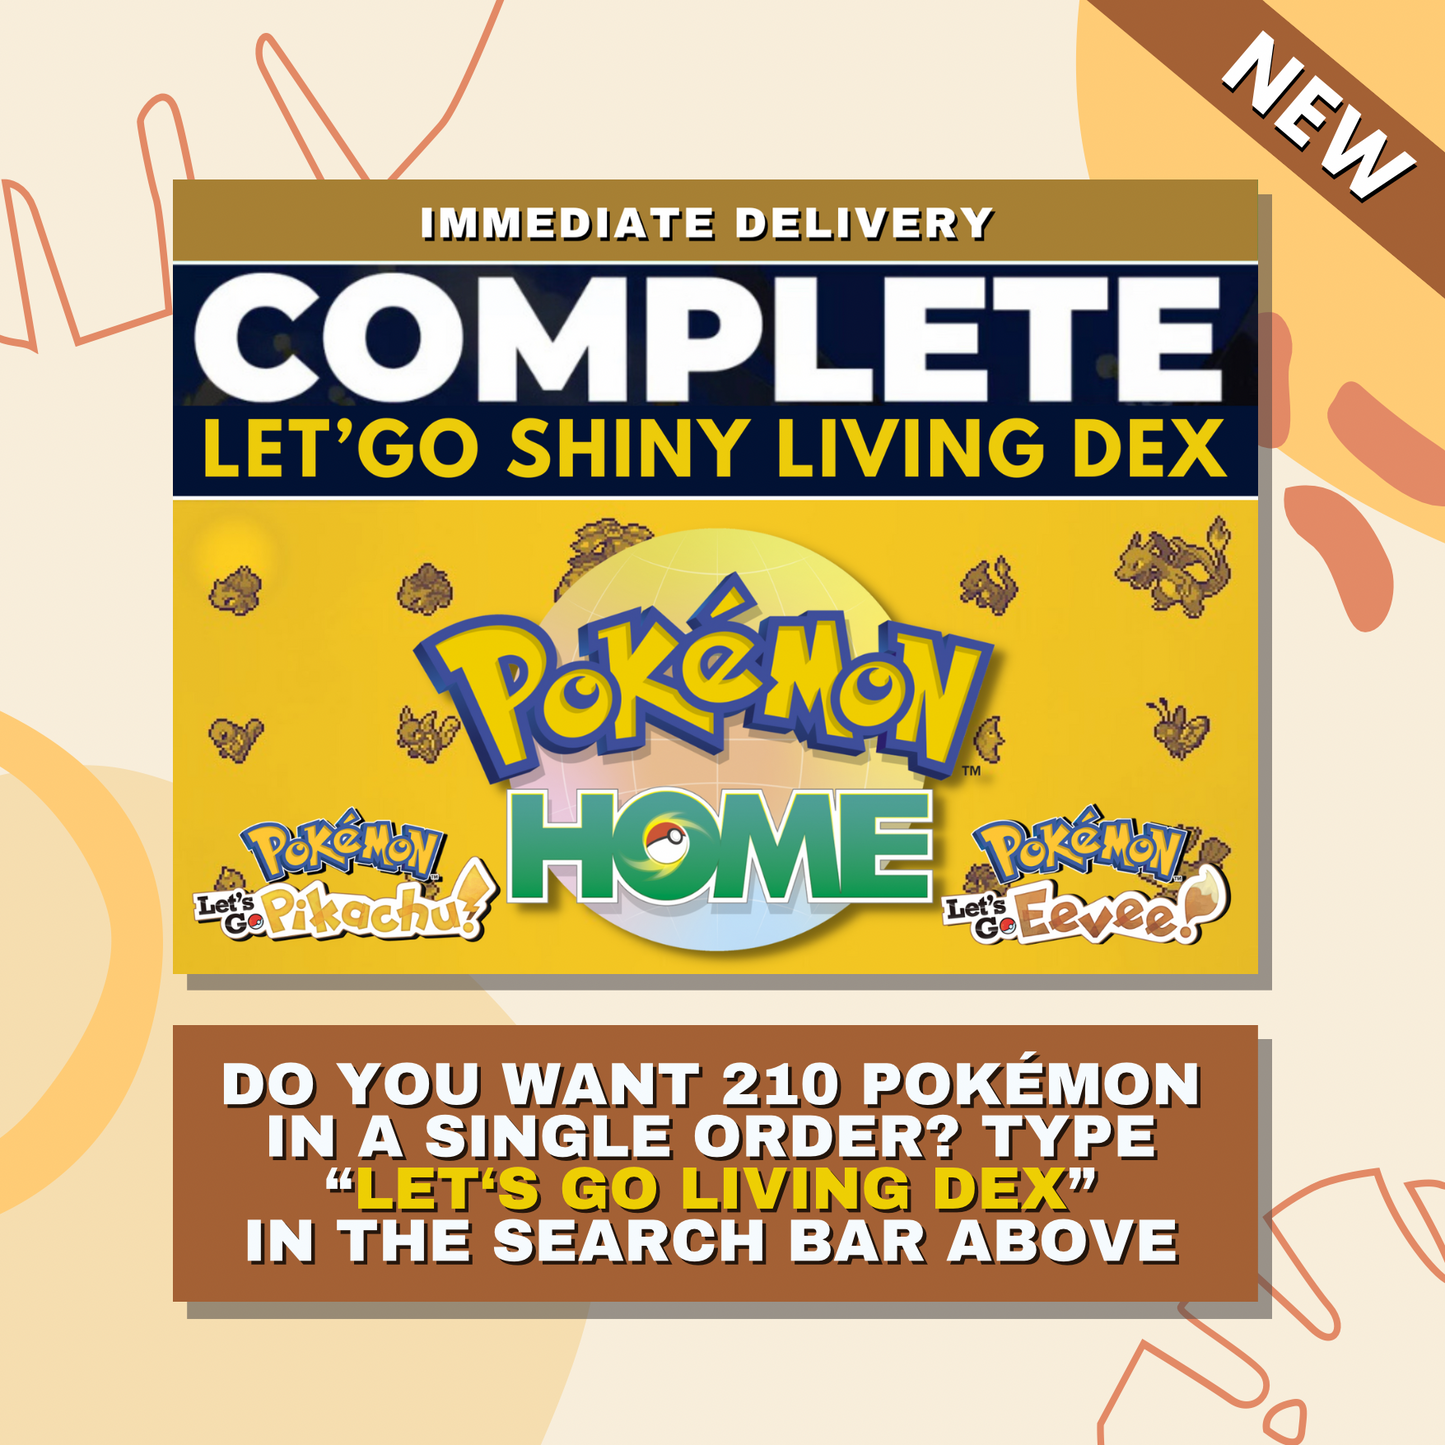 Beedrill Shiny ✨ or Non Shiny Pokémon Let's Go Pikachu Eevee Level 100 Competitive Battle Ready 6 IV 100% Legit Legal Customizable Custom OT by Shiny Living Dex | Shiny Living Dex